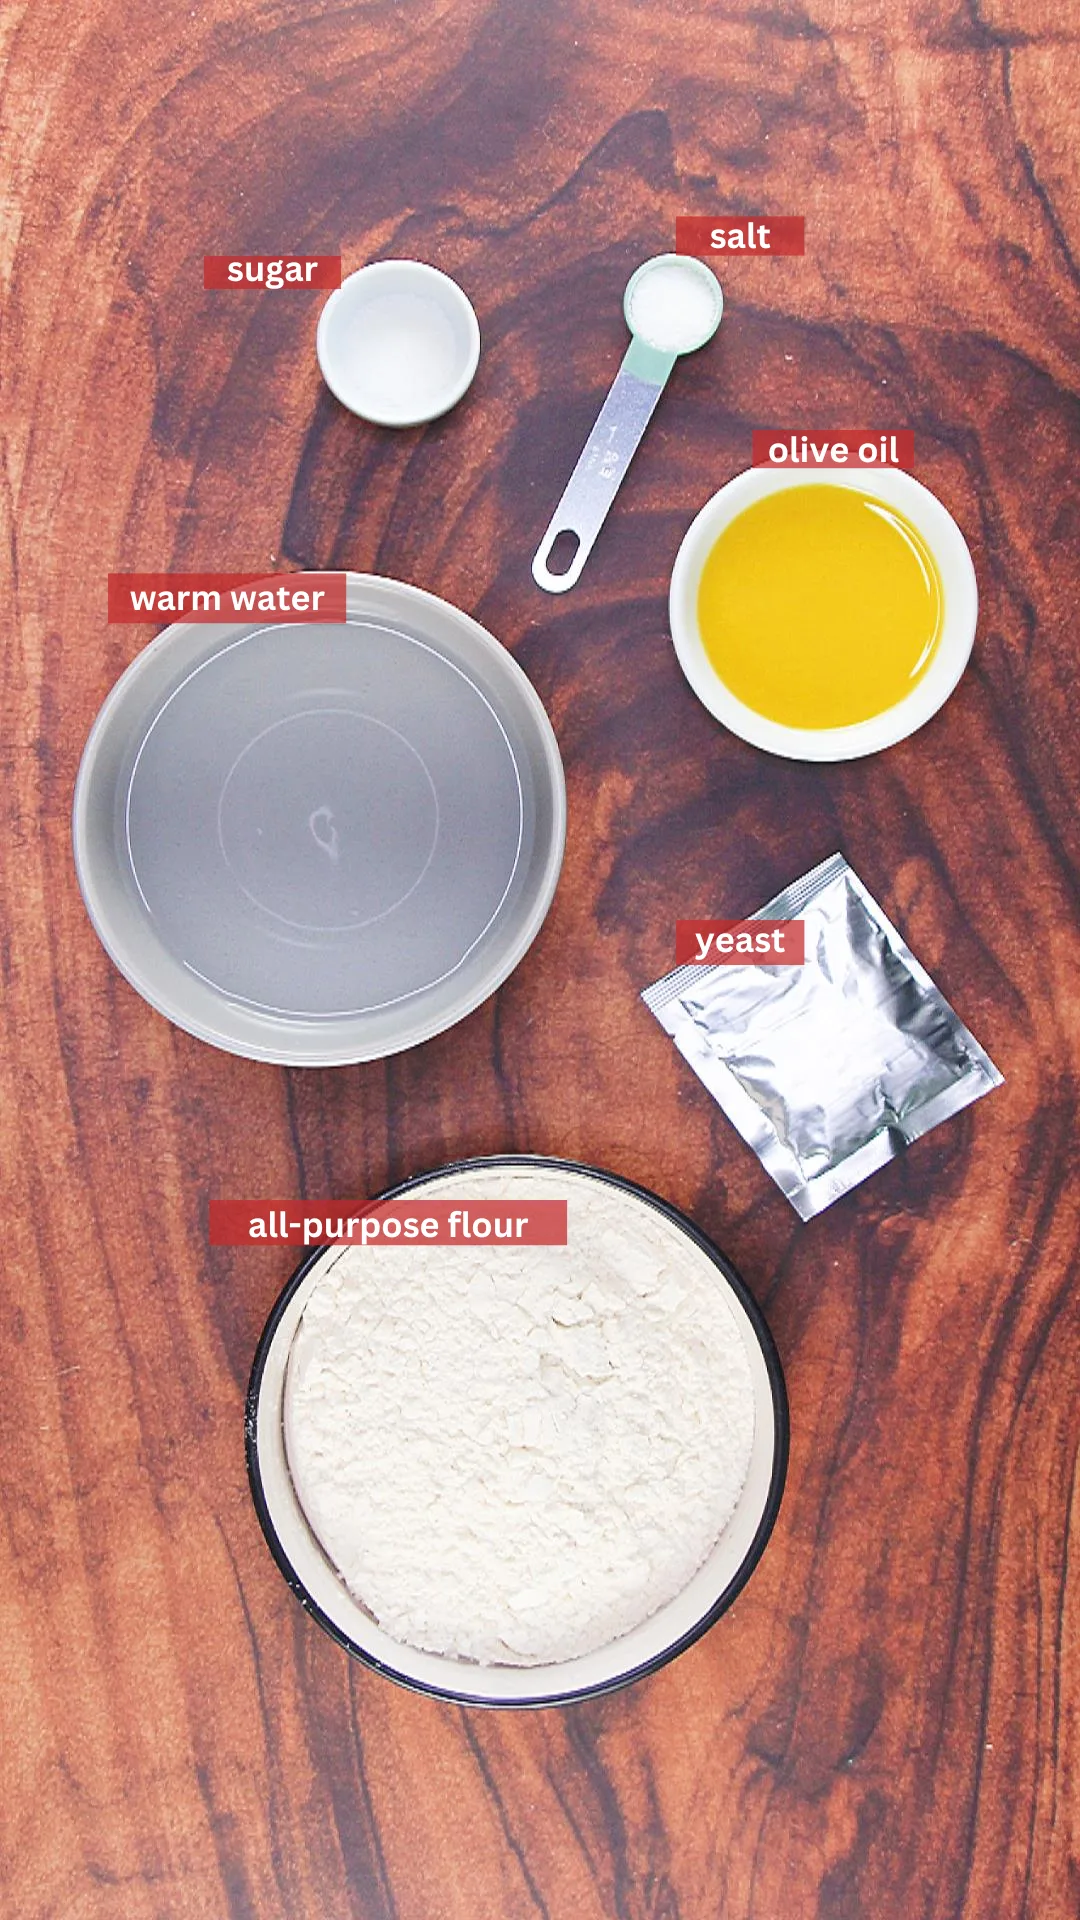 Pita Bread Ingredients: sugar, salt, olive oil, warm water, all-purpose flour, and yeast.